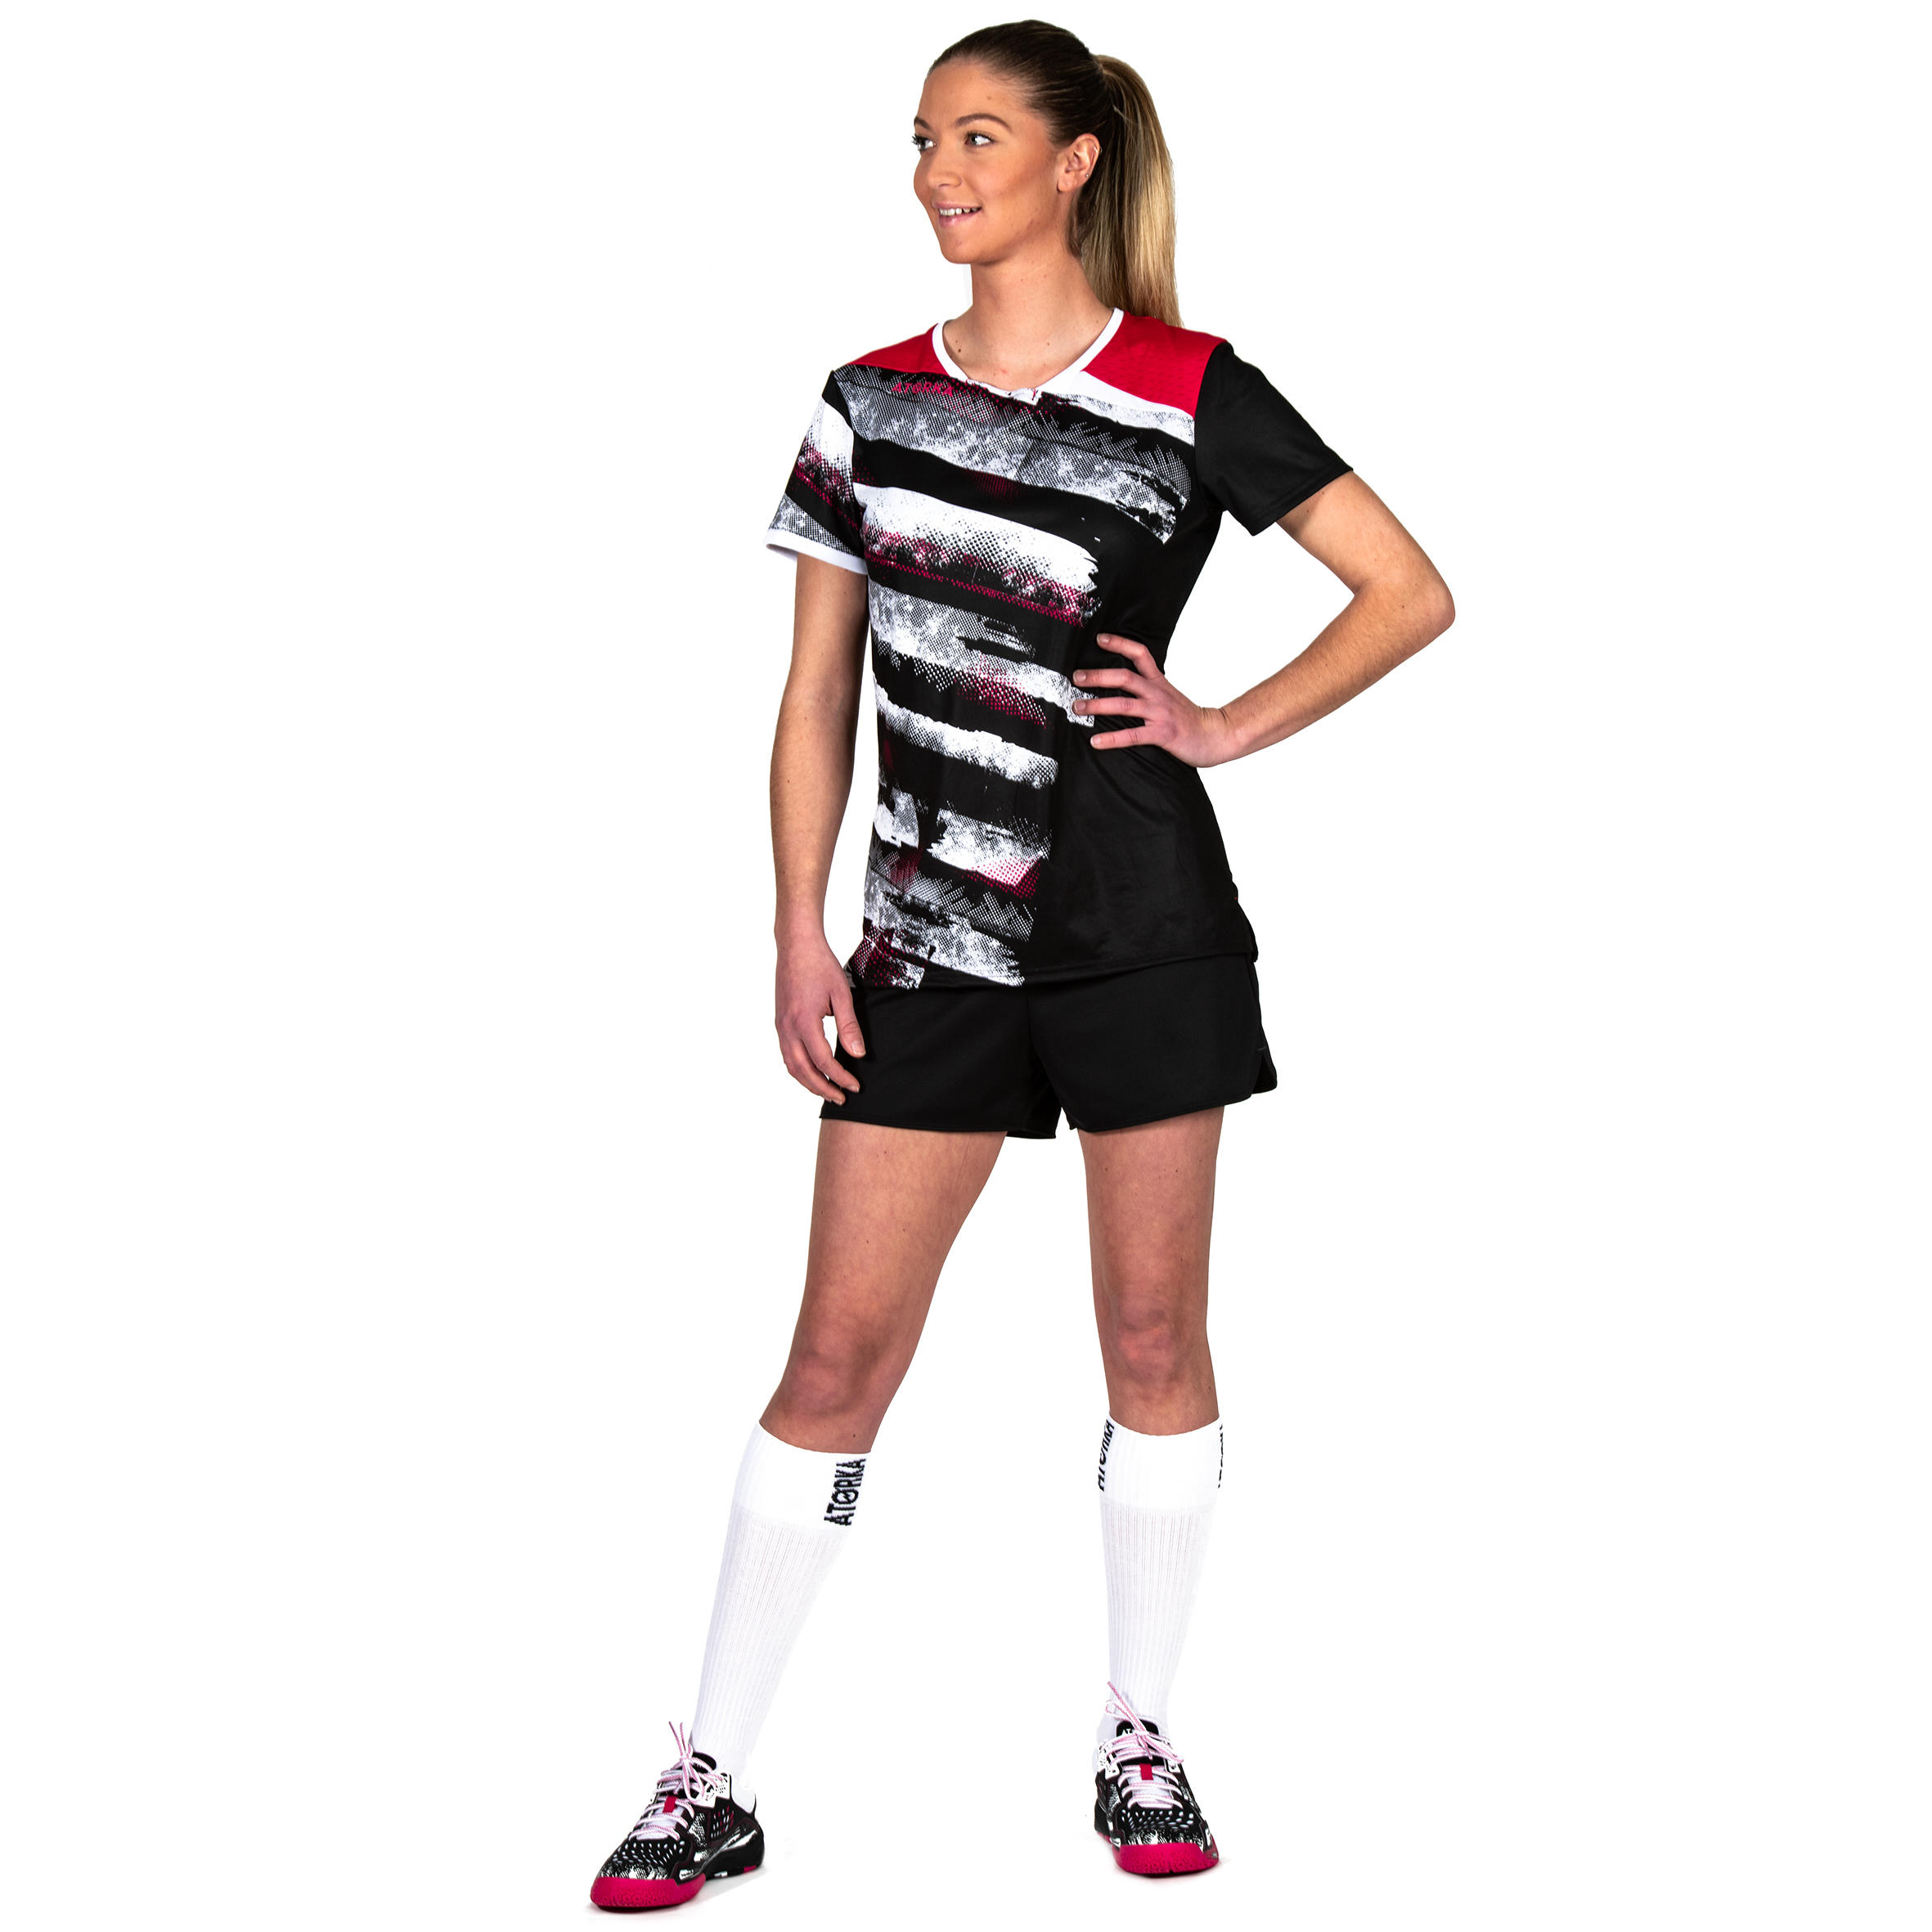 H500 Handball Jersey - Black/Pink 3/8